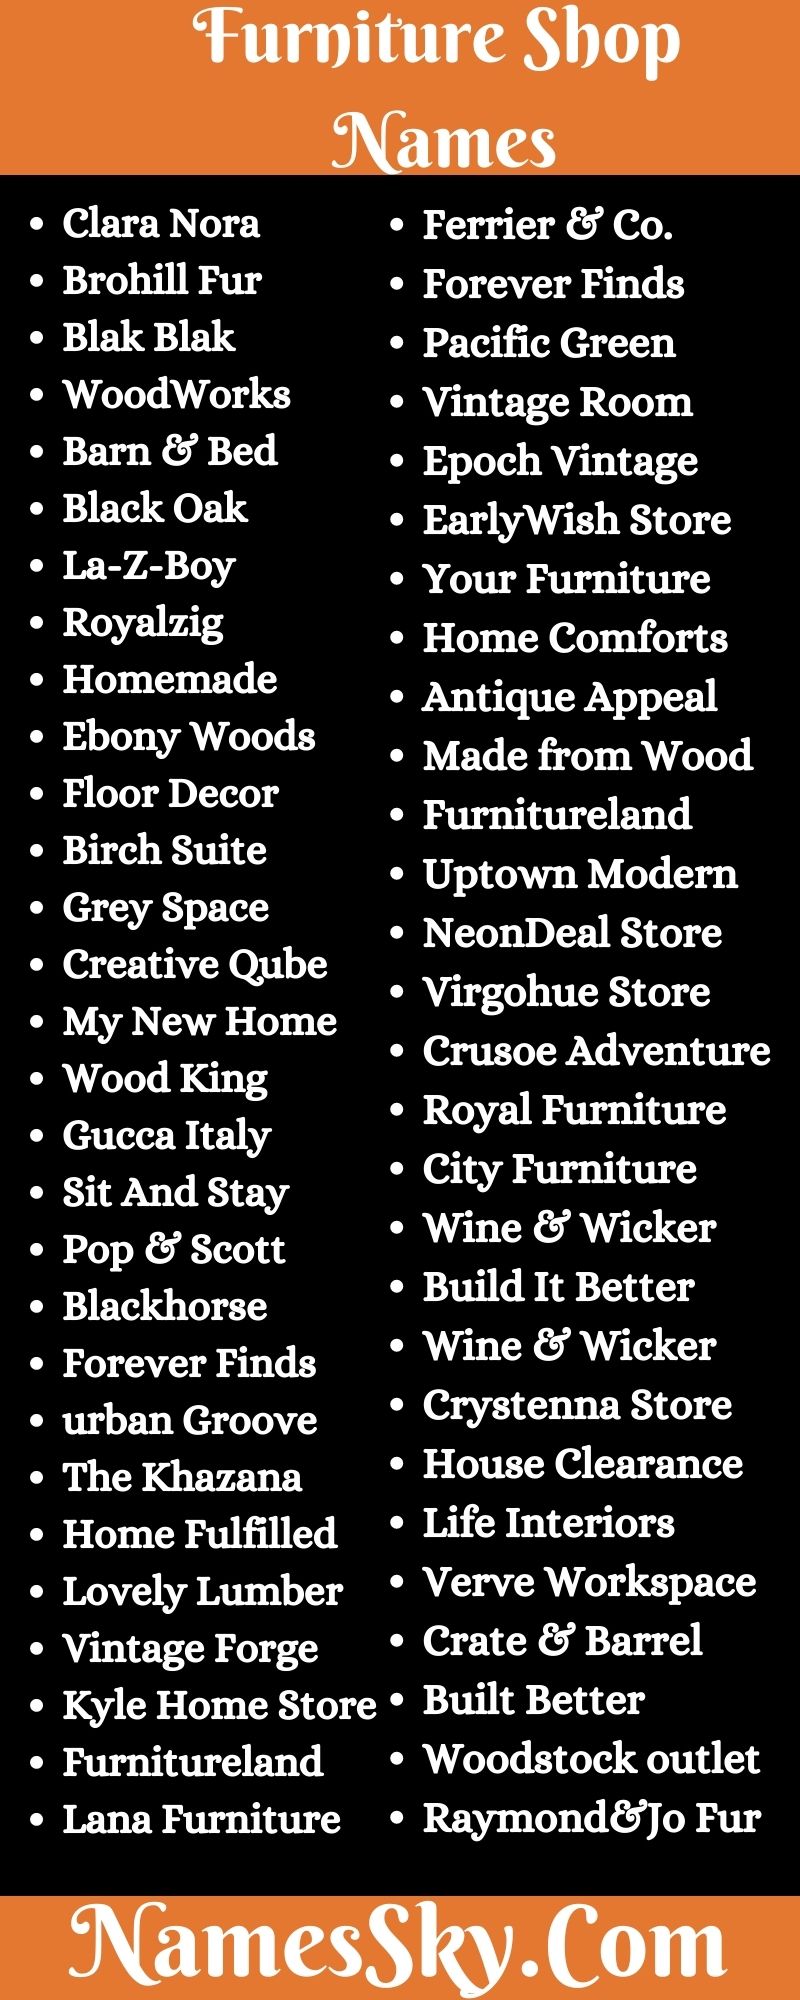 Furniture Shop Names